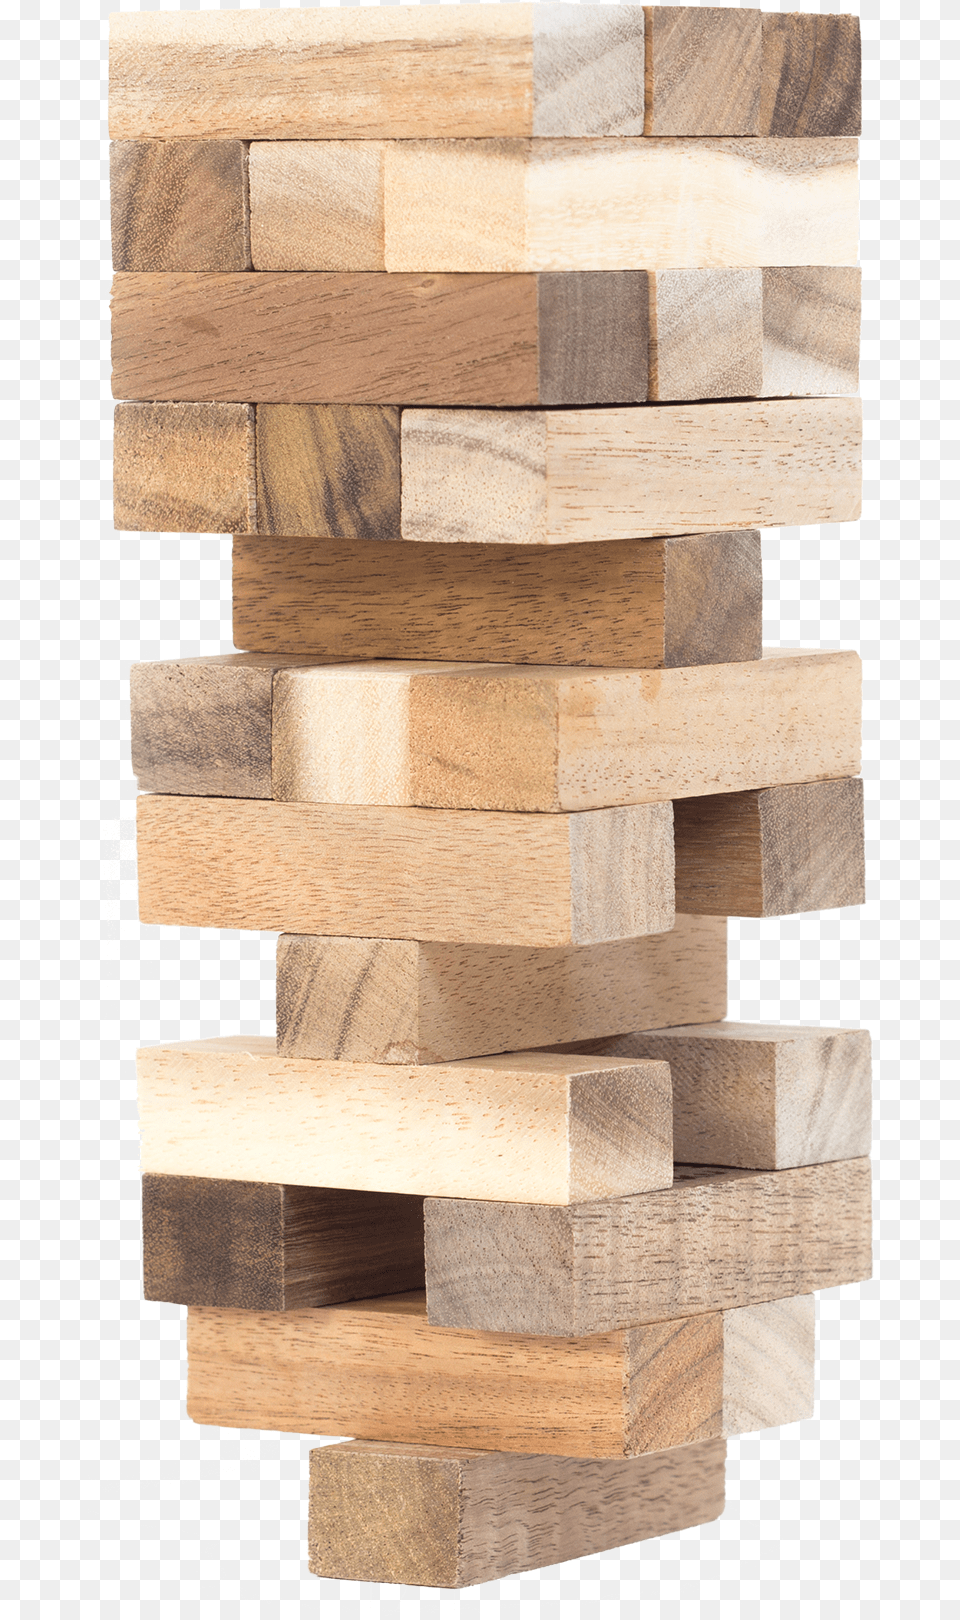 Transparent Jenga Clipart Transparent Jenga Blocks, Lumber, Plywood, Wood, Hardwood Png Image